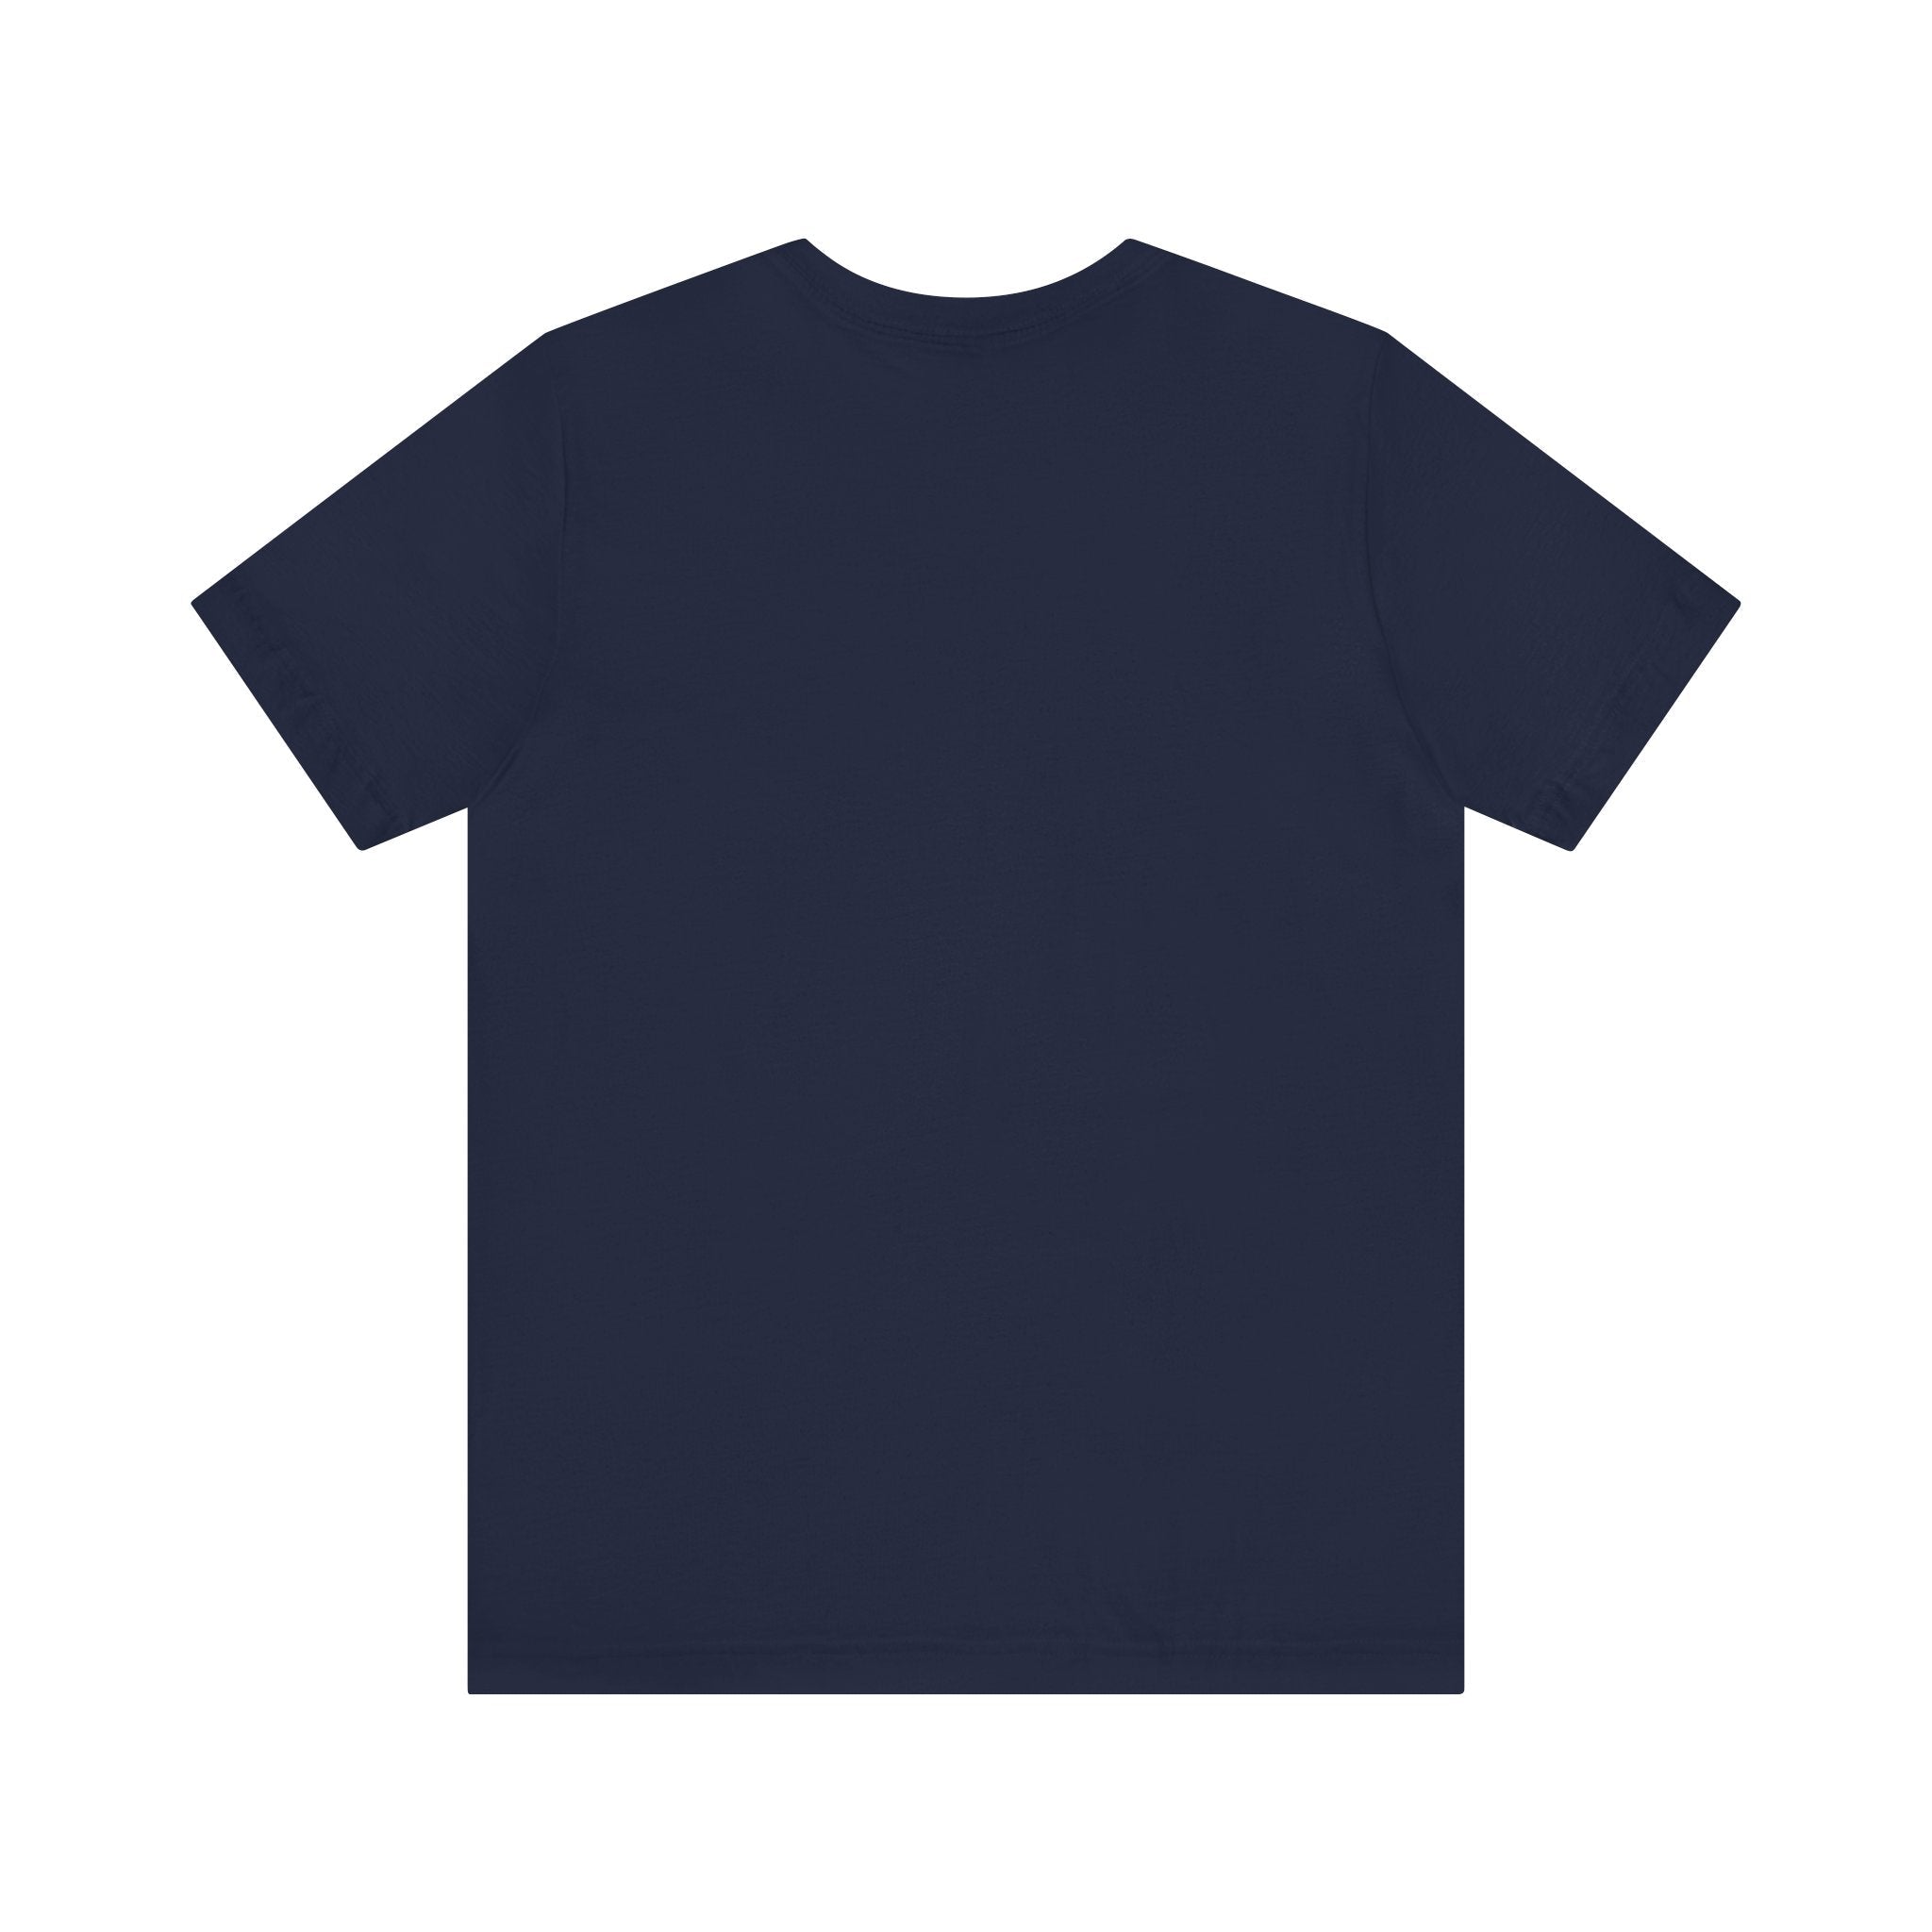 Printed navy surfing t-shirt with white logo - Soulshinecreators Unisex Tee